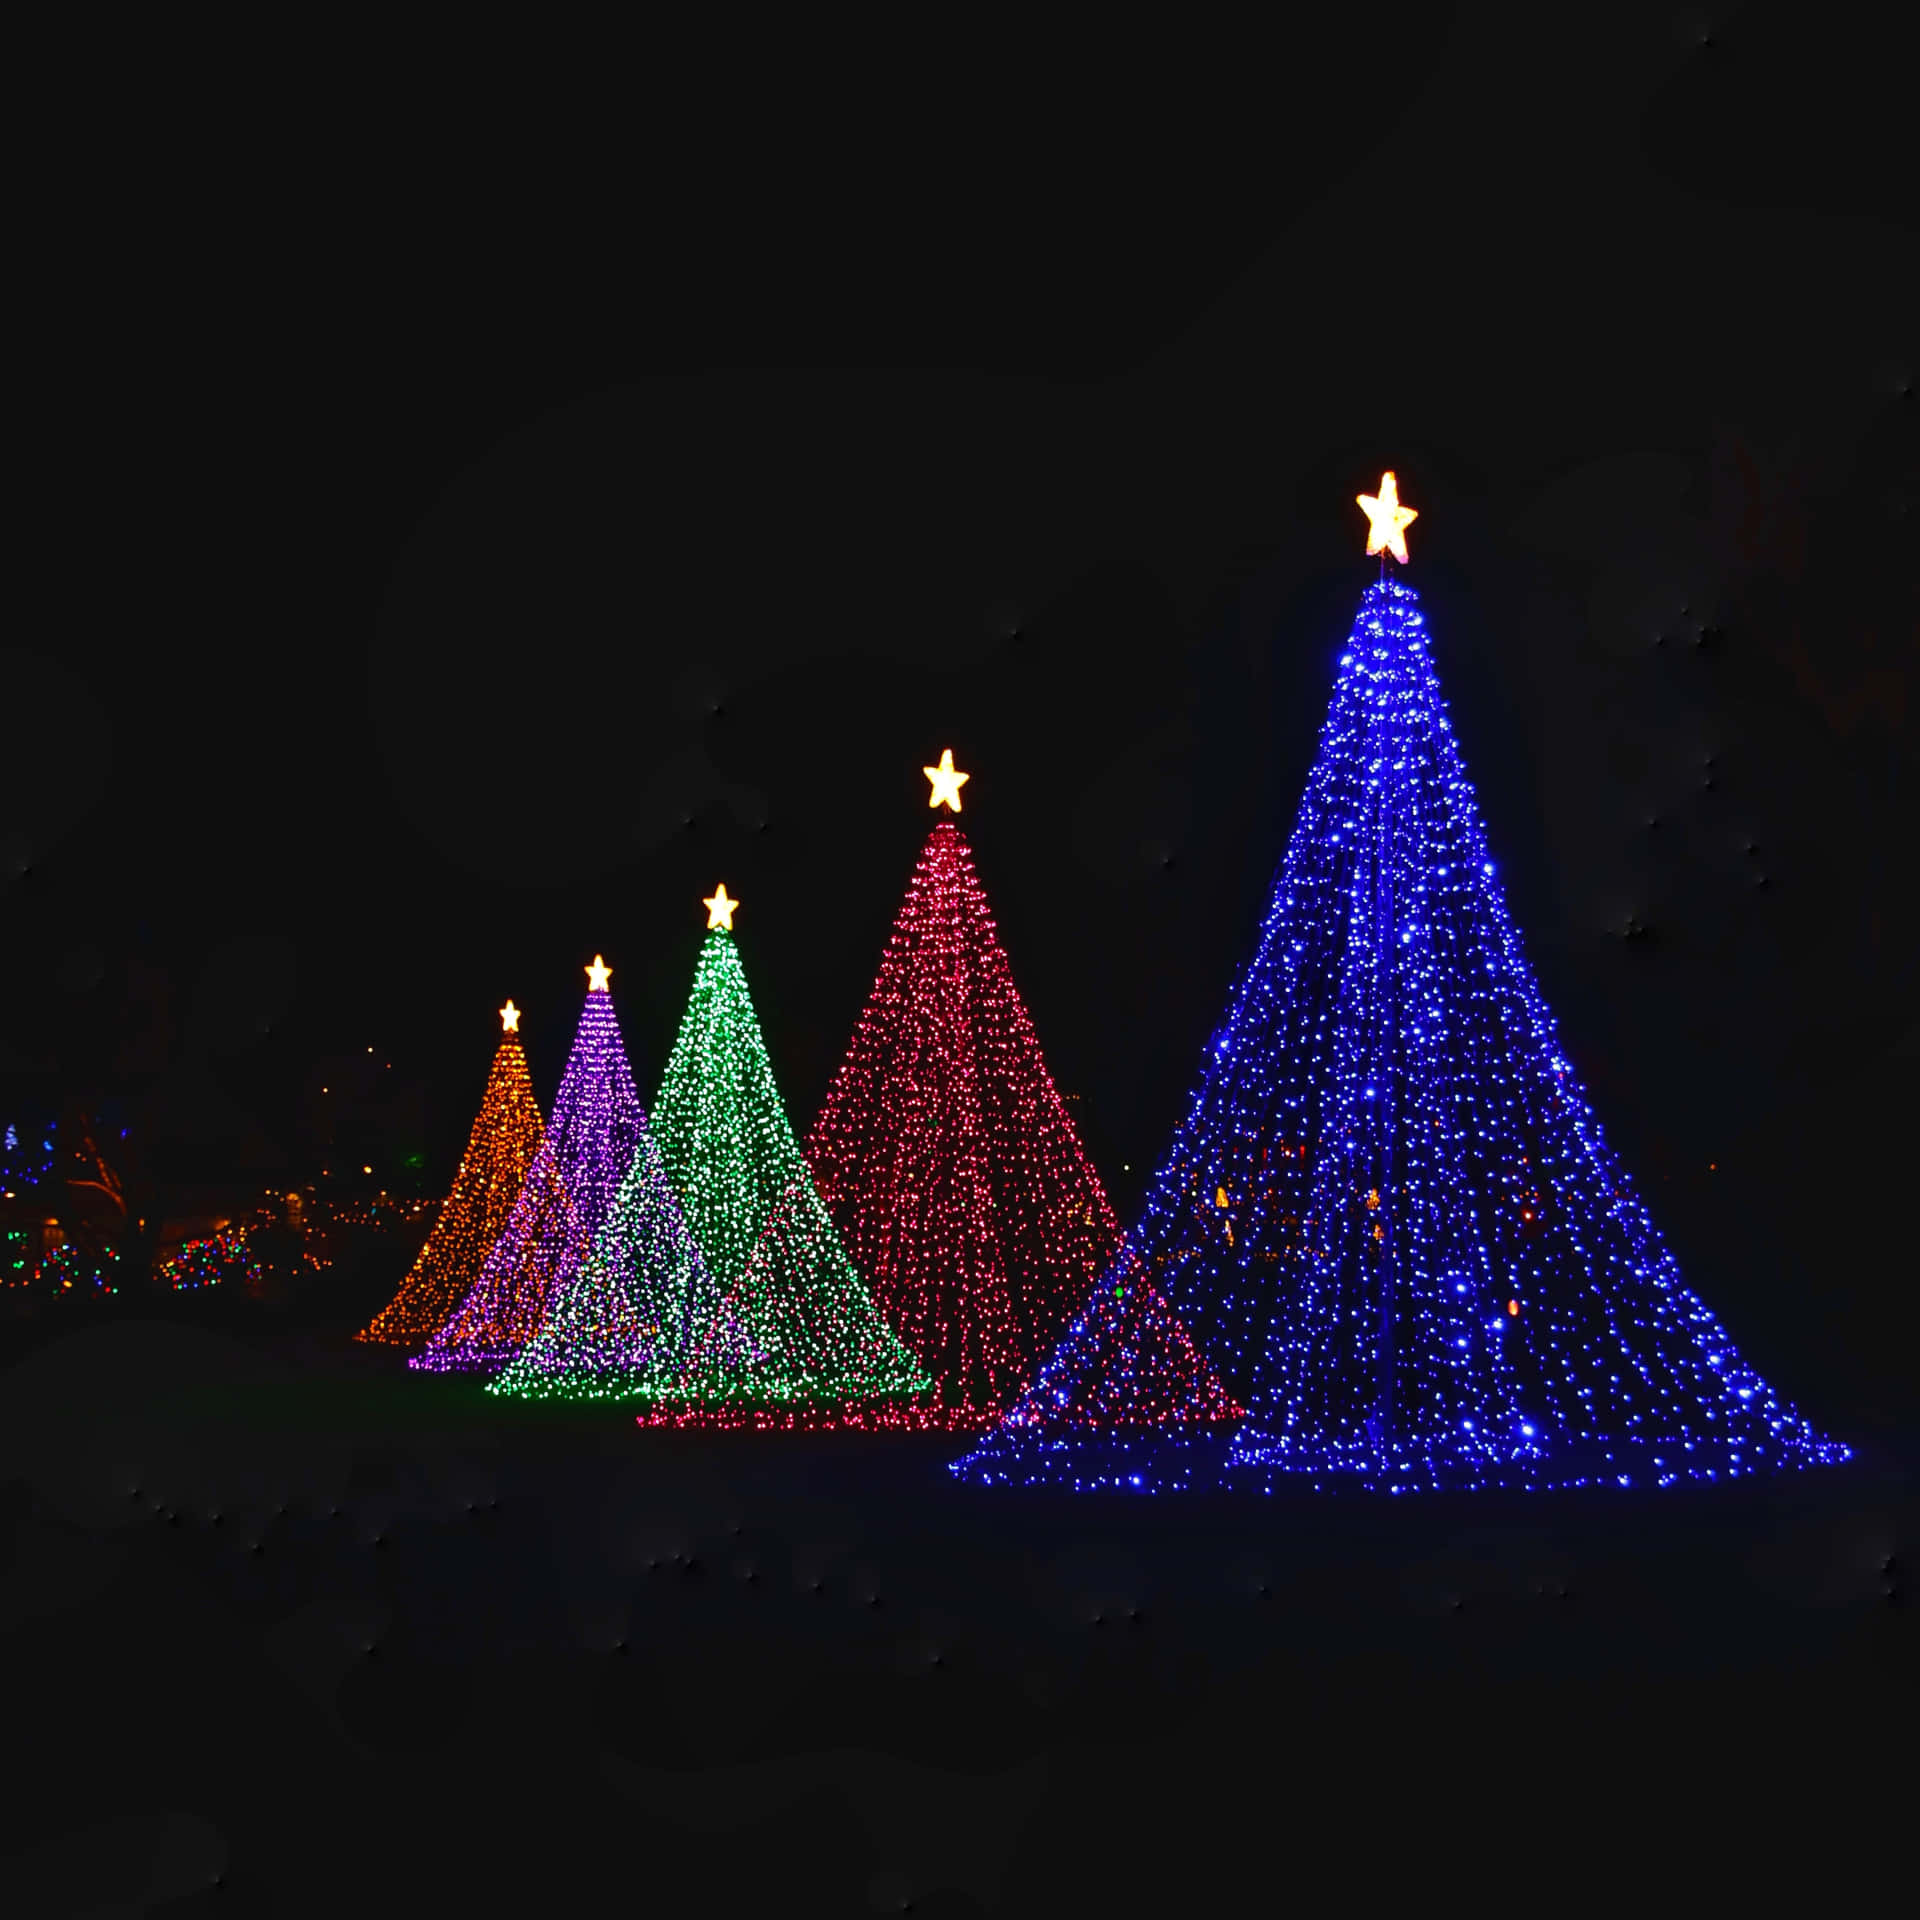 Iluminatu Hogar Esta Navidad Con Luces Vibrantes Que Resalten La Magia De La Temporada.